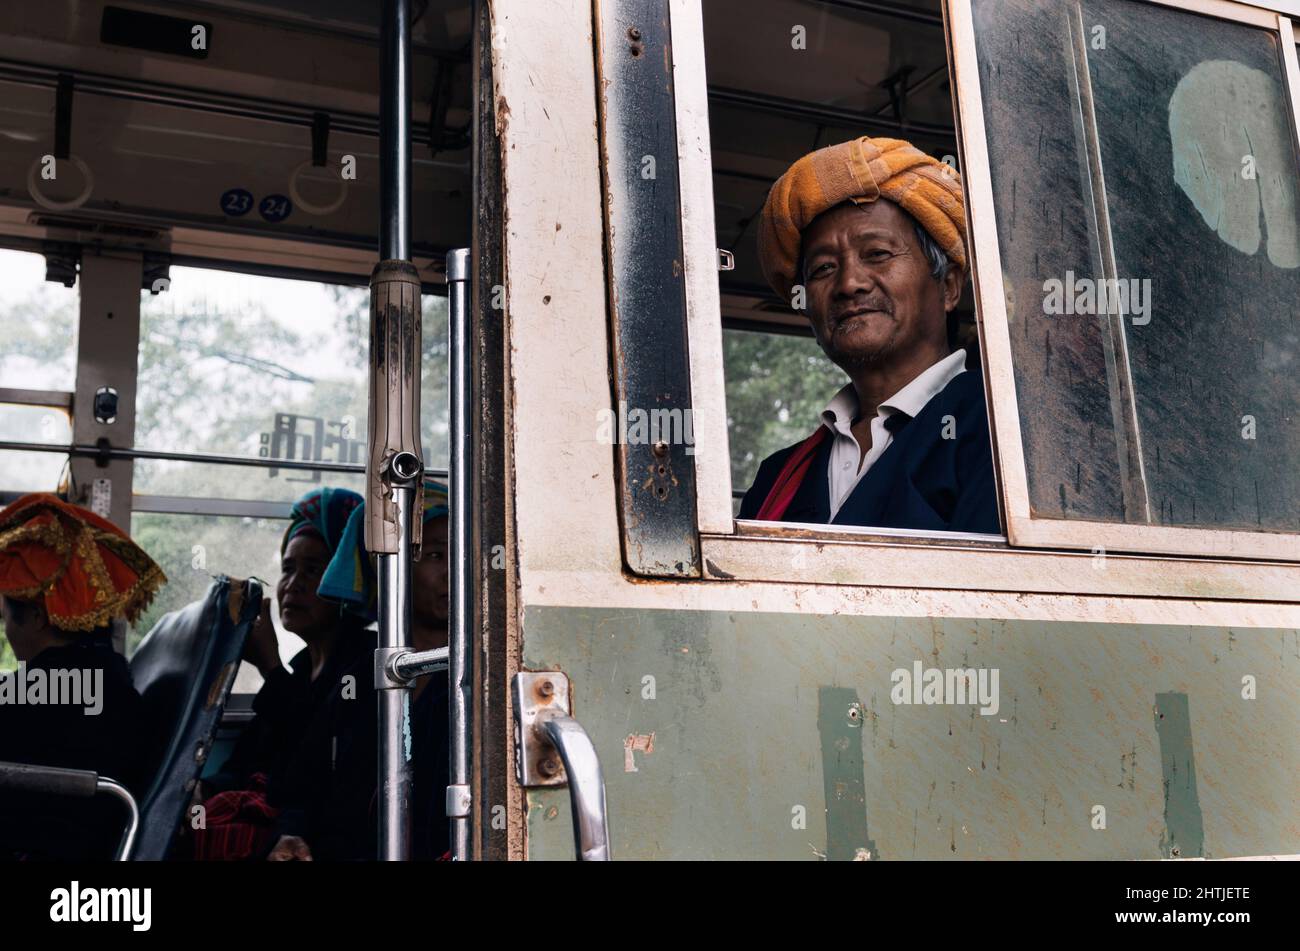 Kakku, Myanmar - 04.16.2017: Old Asian man from Karen ethnic minority with traditional towel turban near passengers in bus Stock Photo